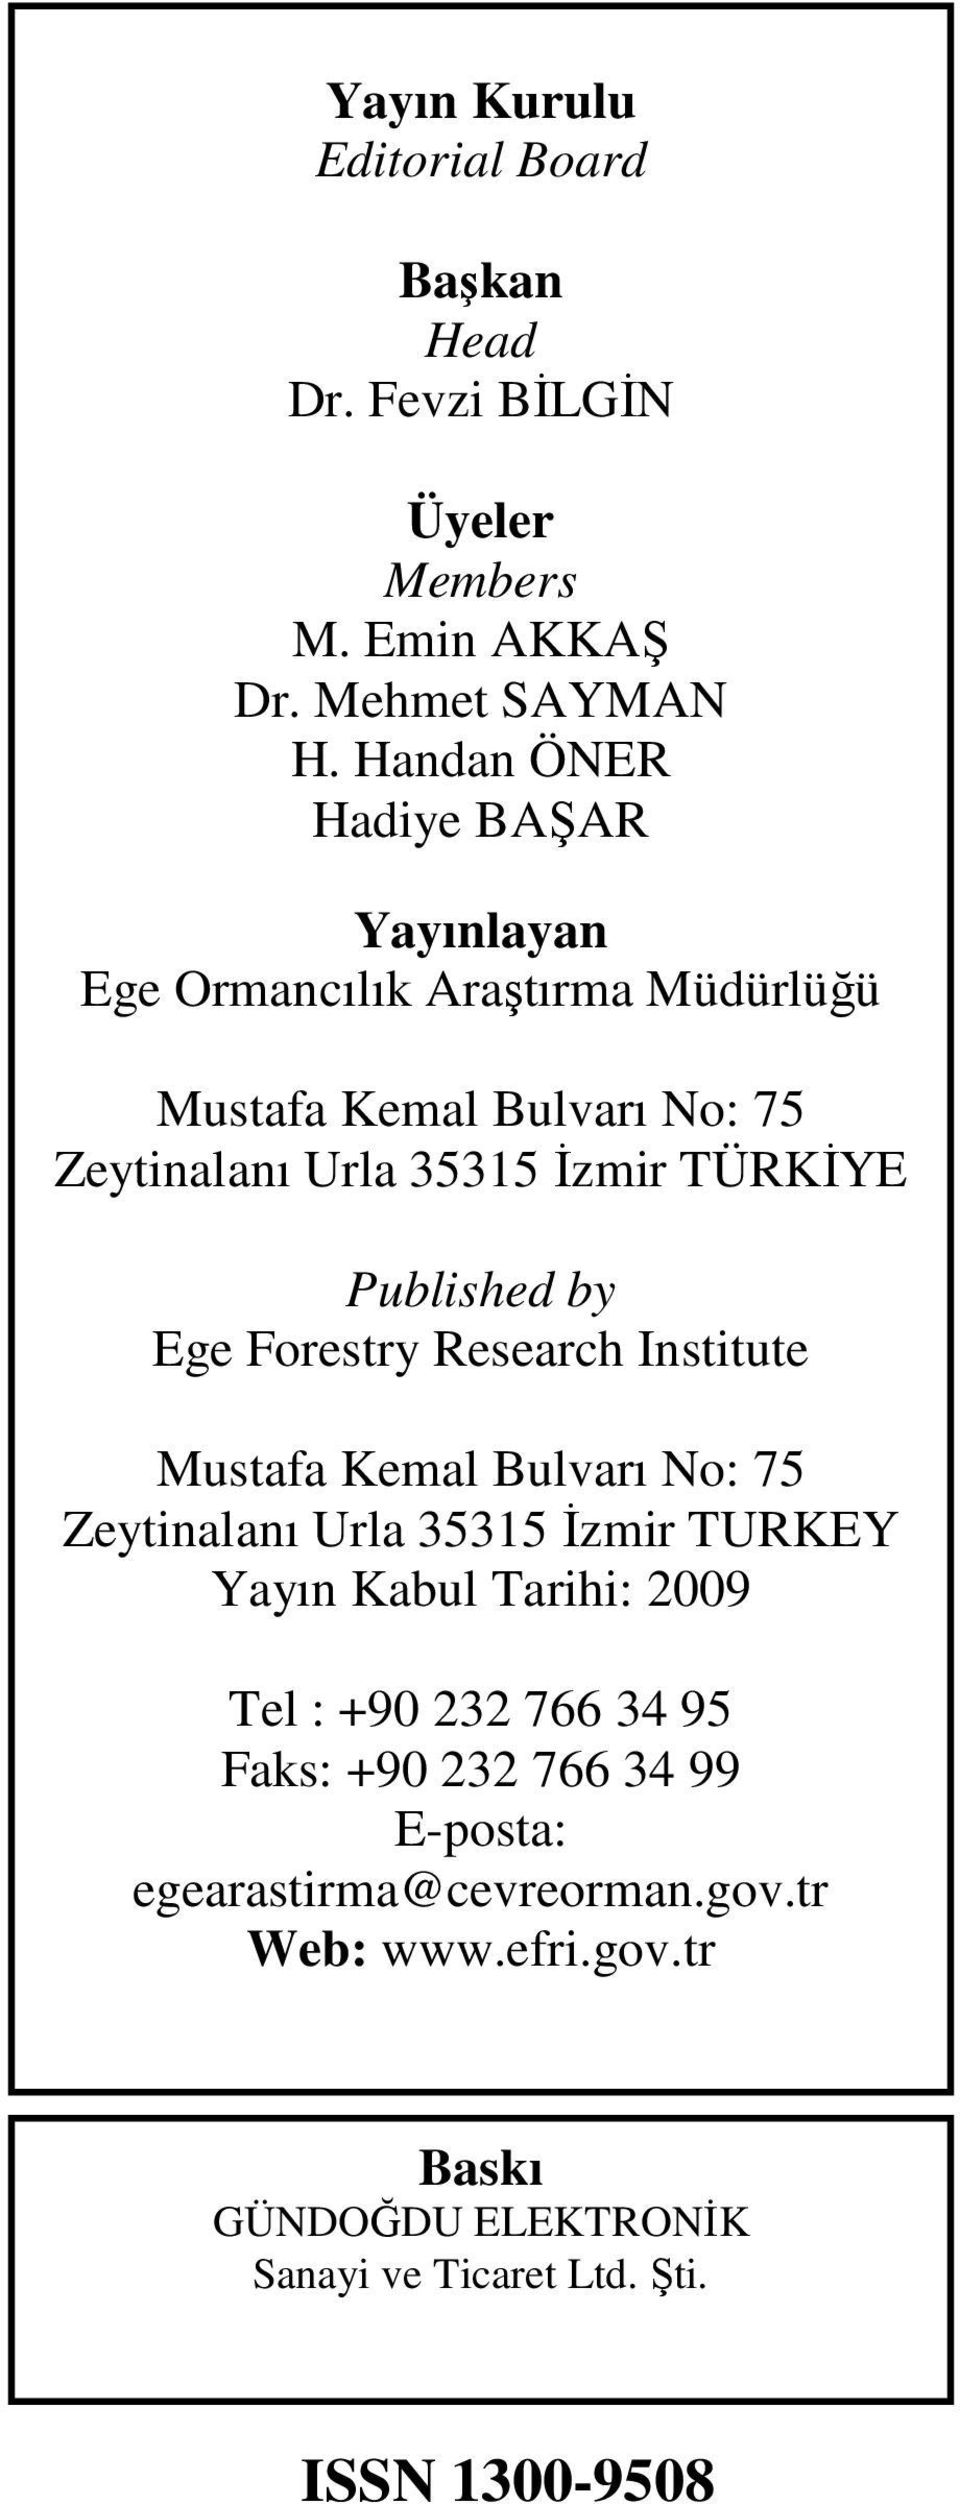 TÜRKİE Pblished b Ege Forestr Research Institte Mstafa Kemal Bları No: Zetinalanı rla İzmir TRKE aın Kabl Tarihi: